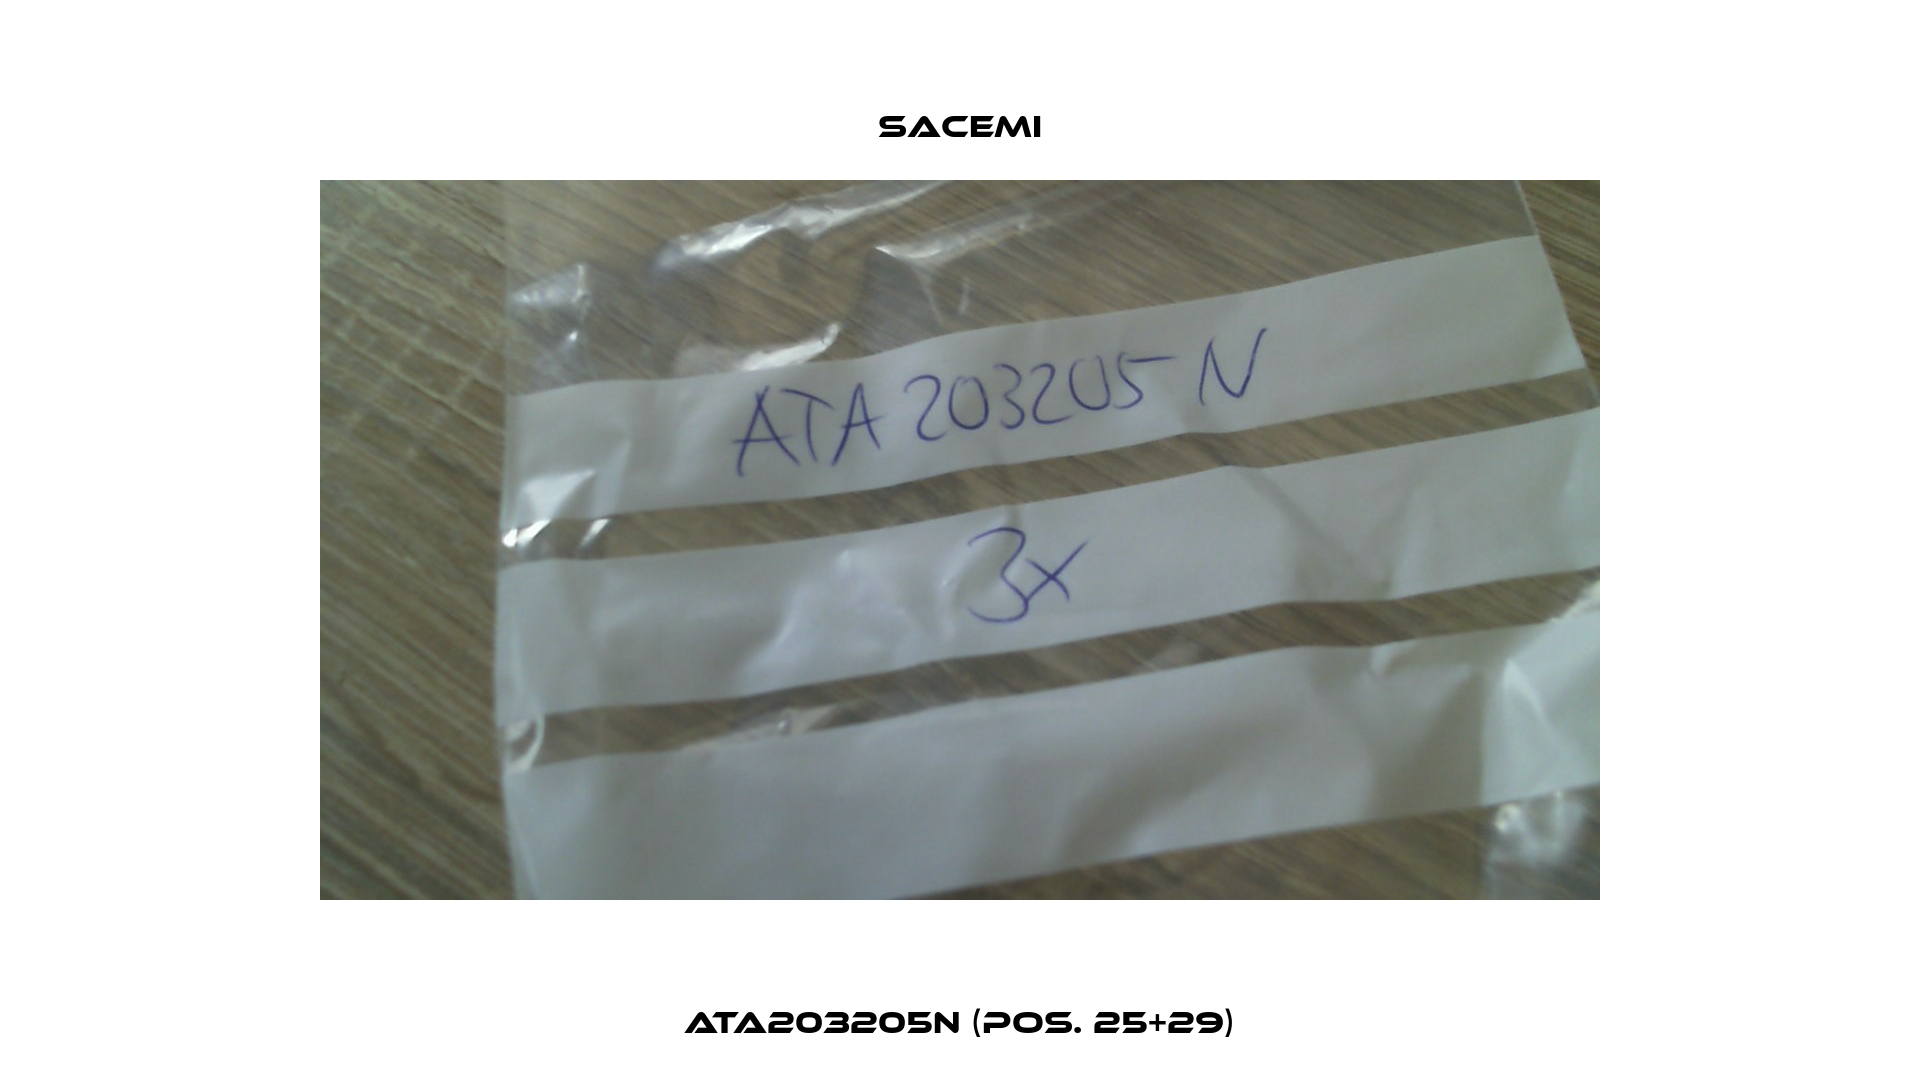 ATA203205N (Pos. 25+29) Sacemi